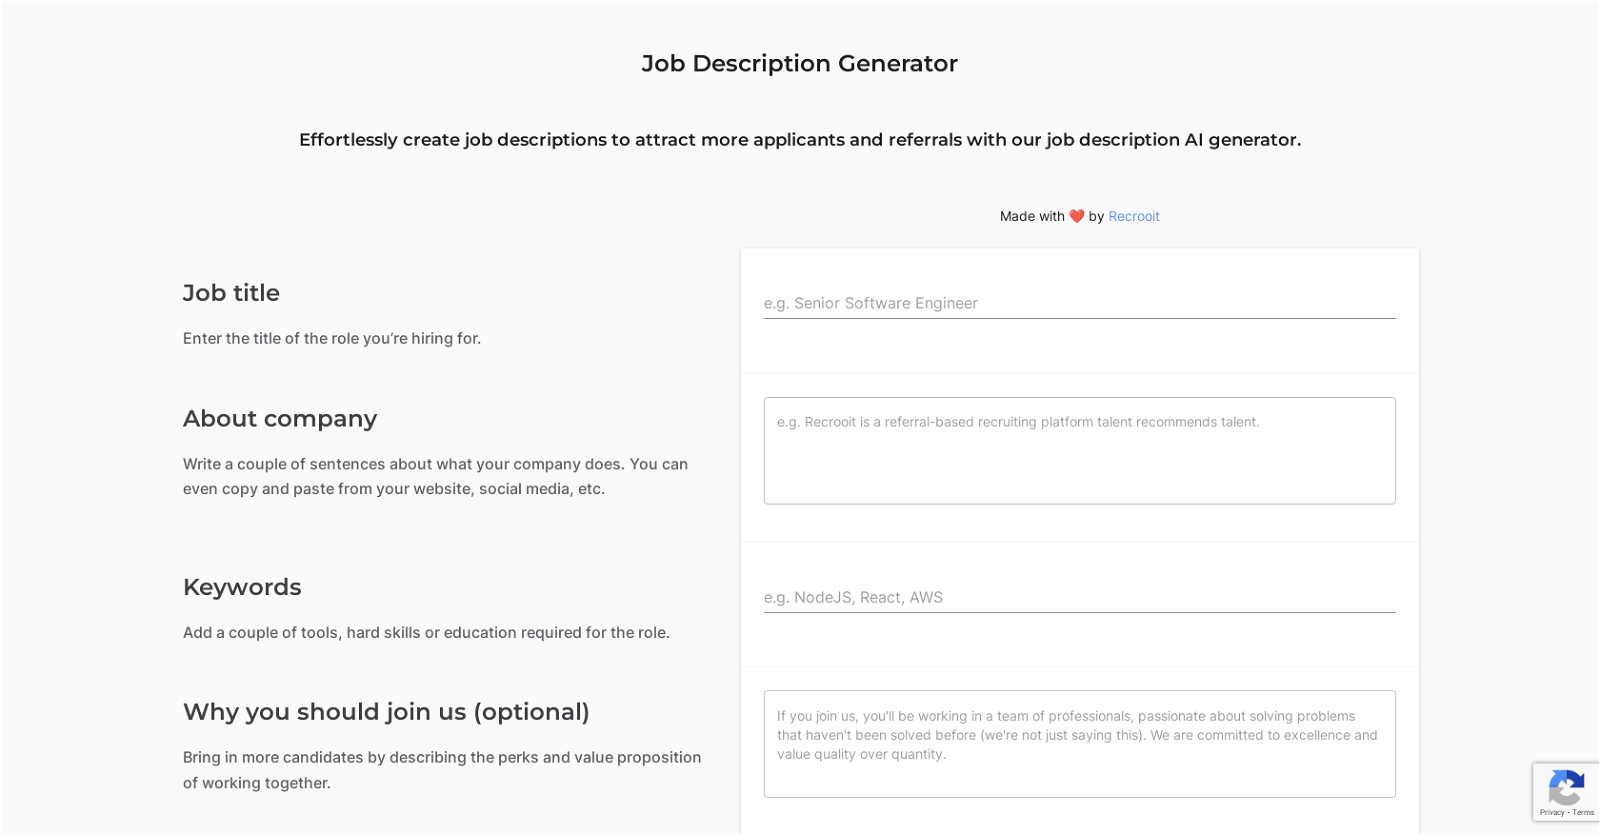 Job Description Generator website